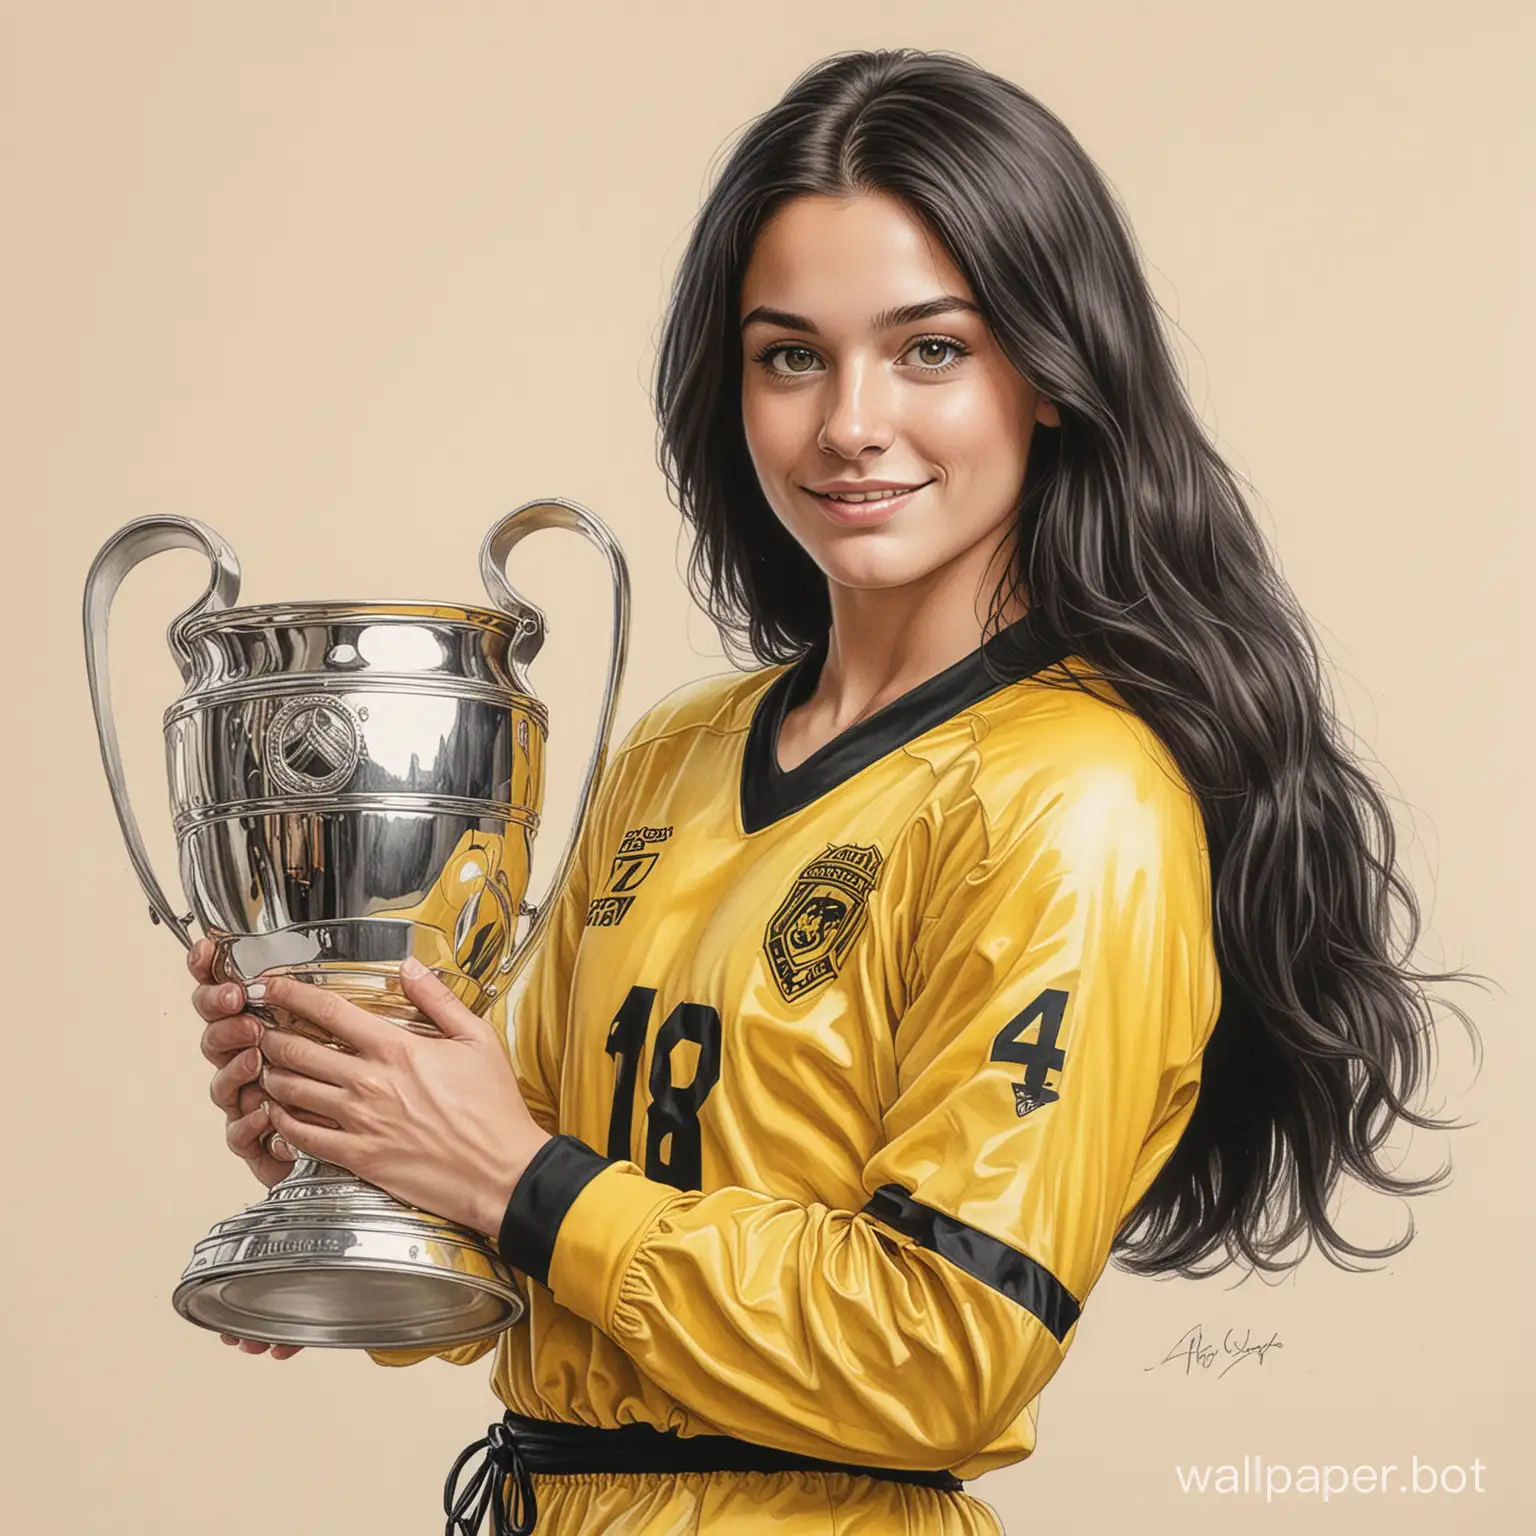 Young-Brooke-Shields-Sketch-18YearOld-Soccer-Champion-in-YellowBlack-Uniform